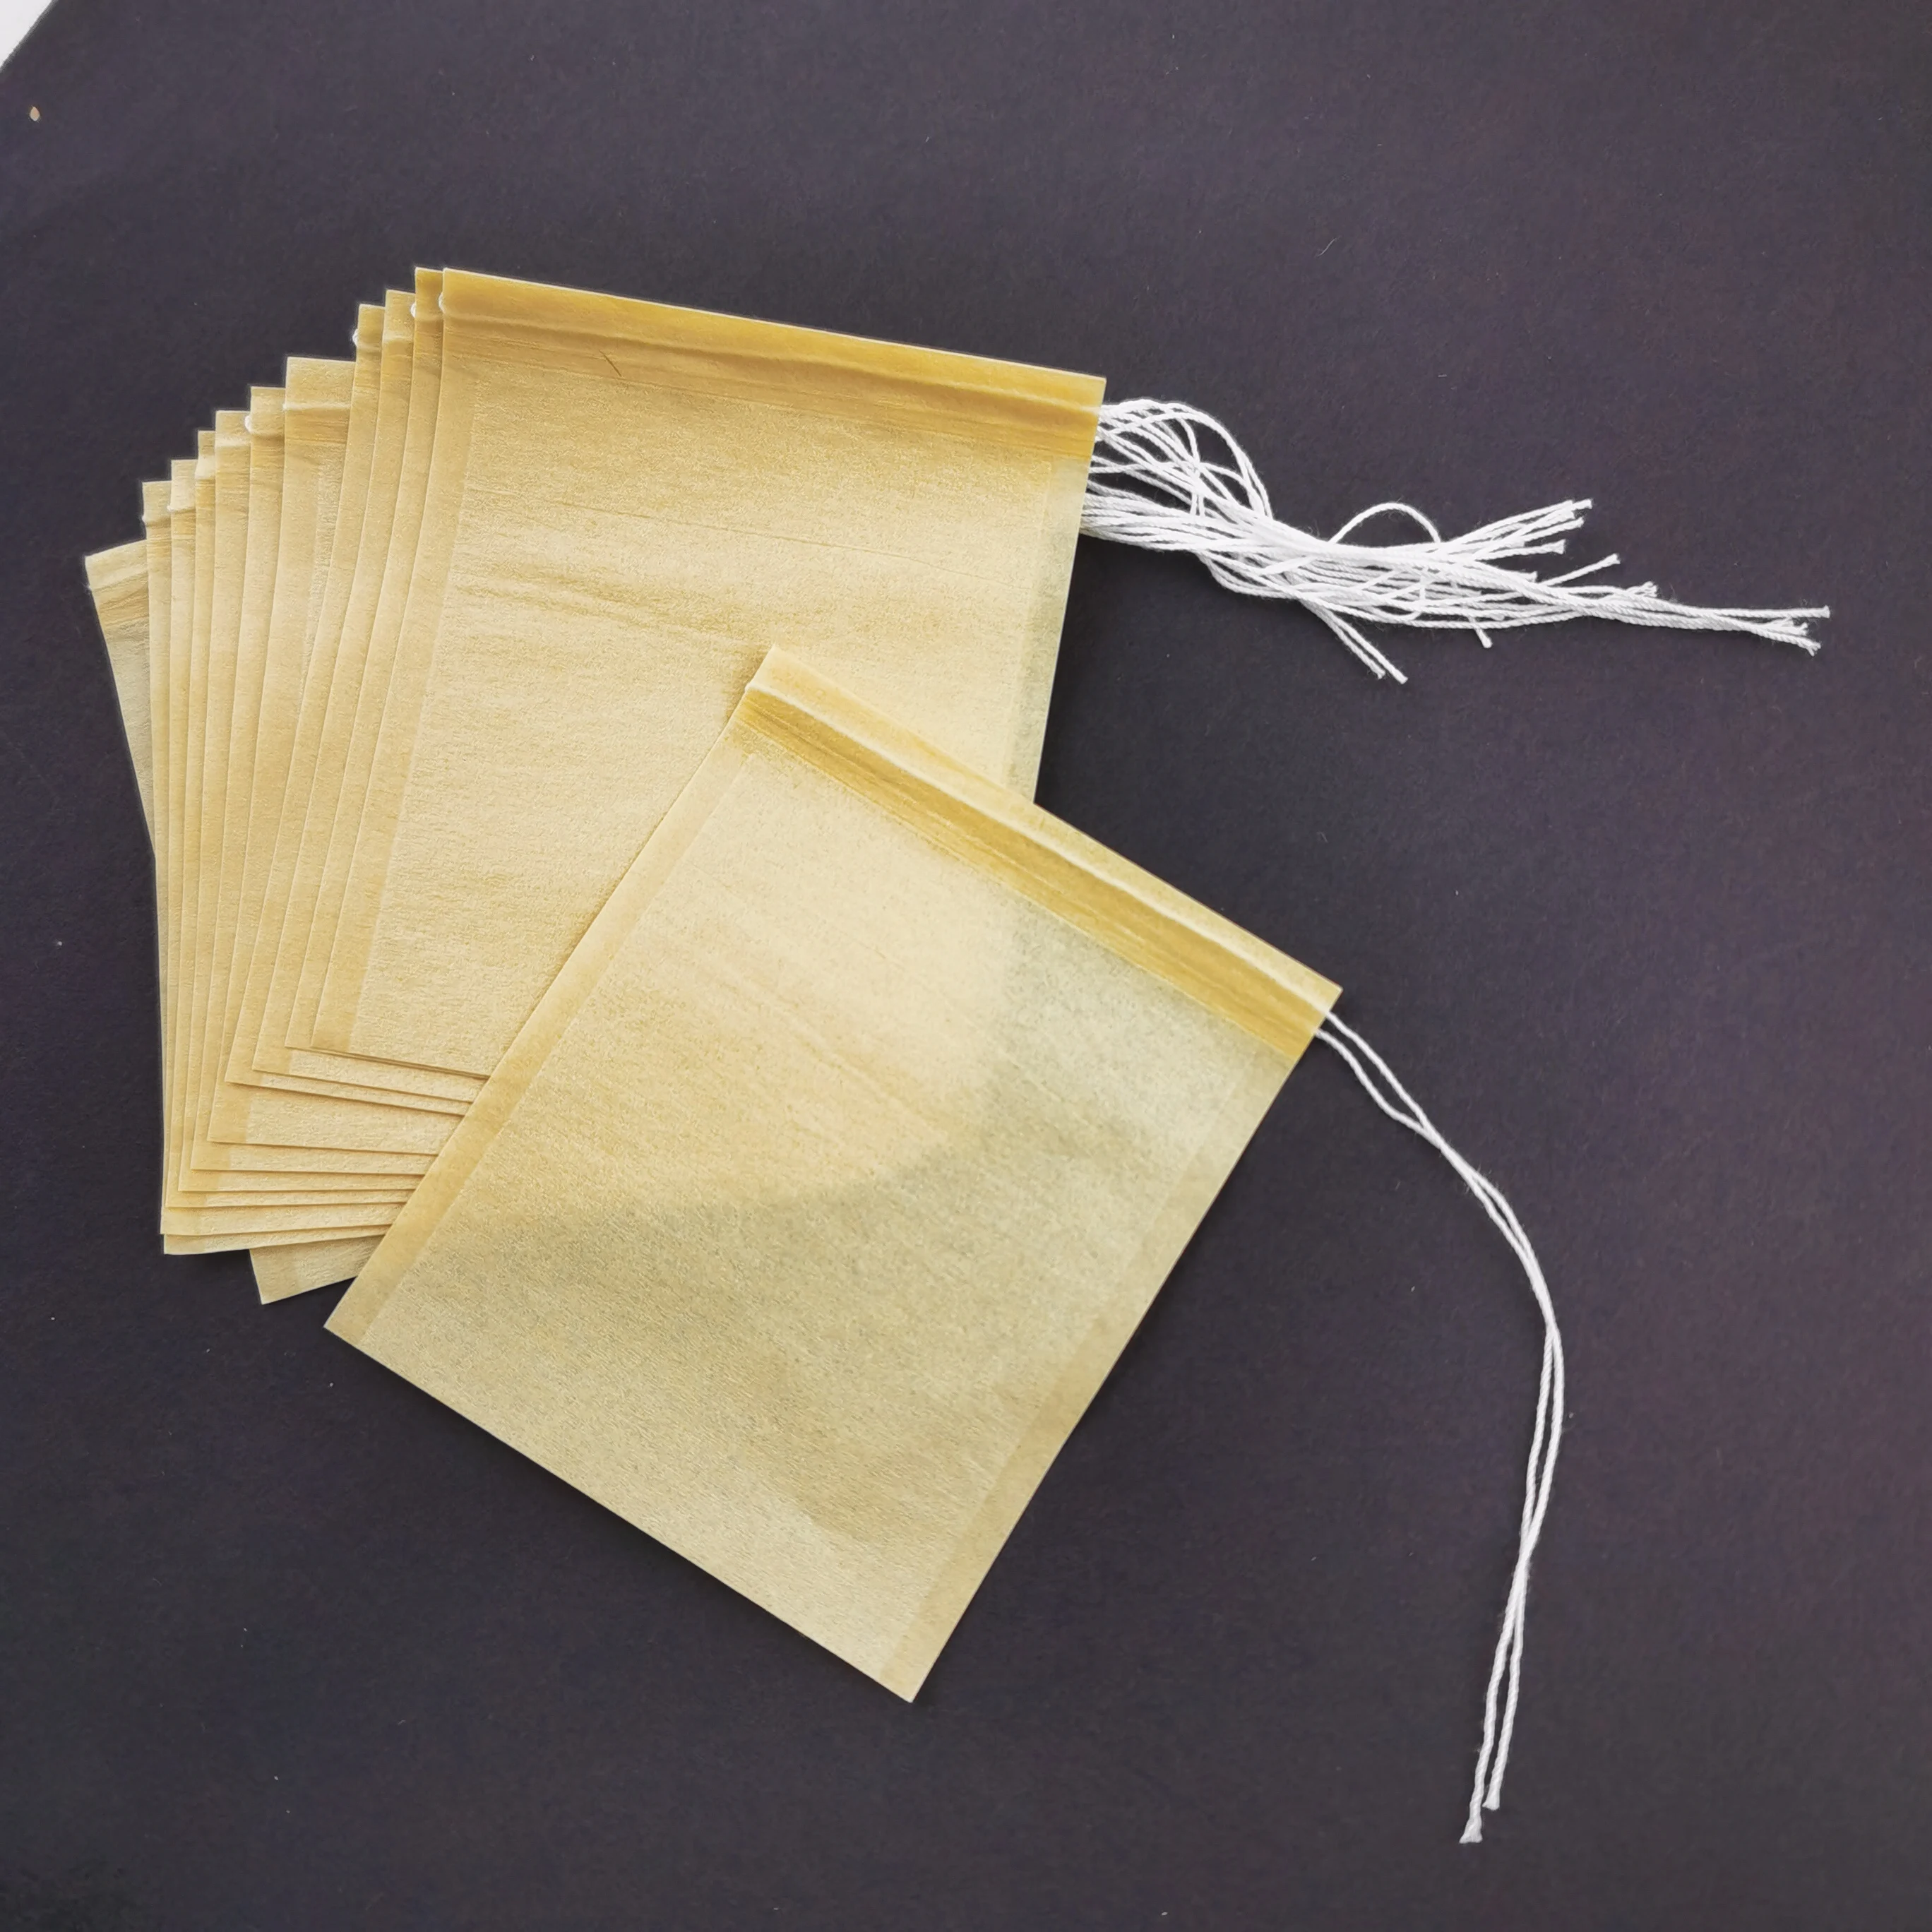 Factory Direct Sales 100 Pcs Filter Paper Square Tea Bag Filter Paper For Tea Bags